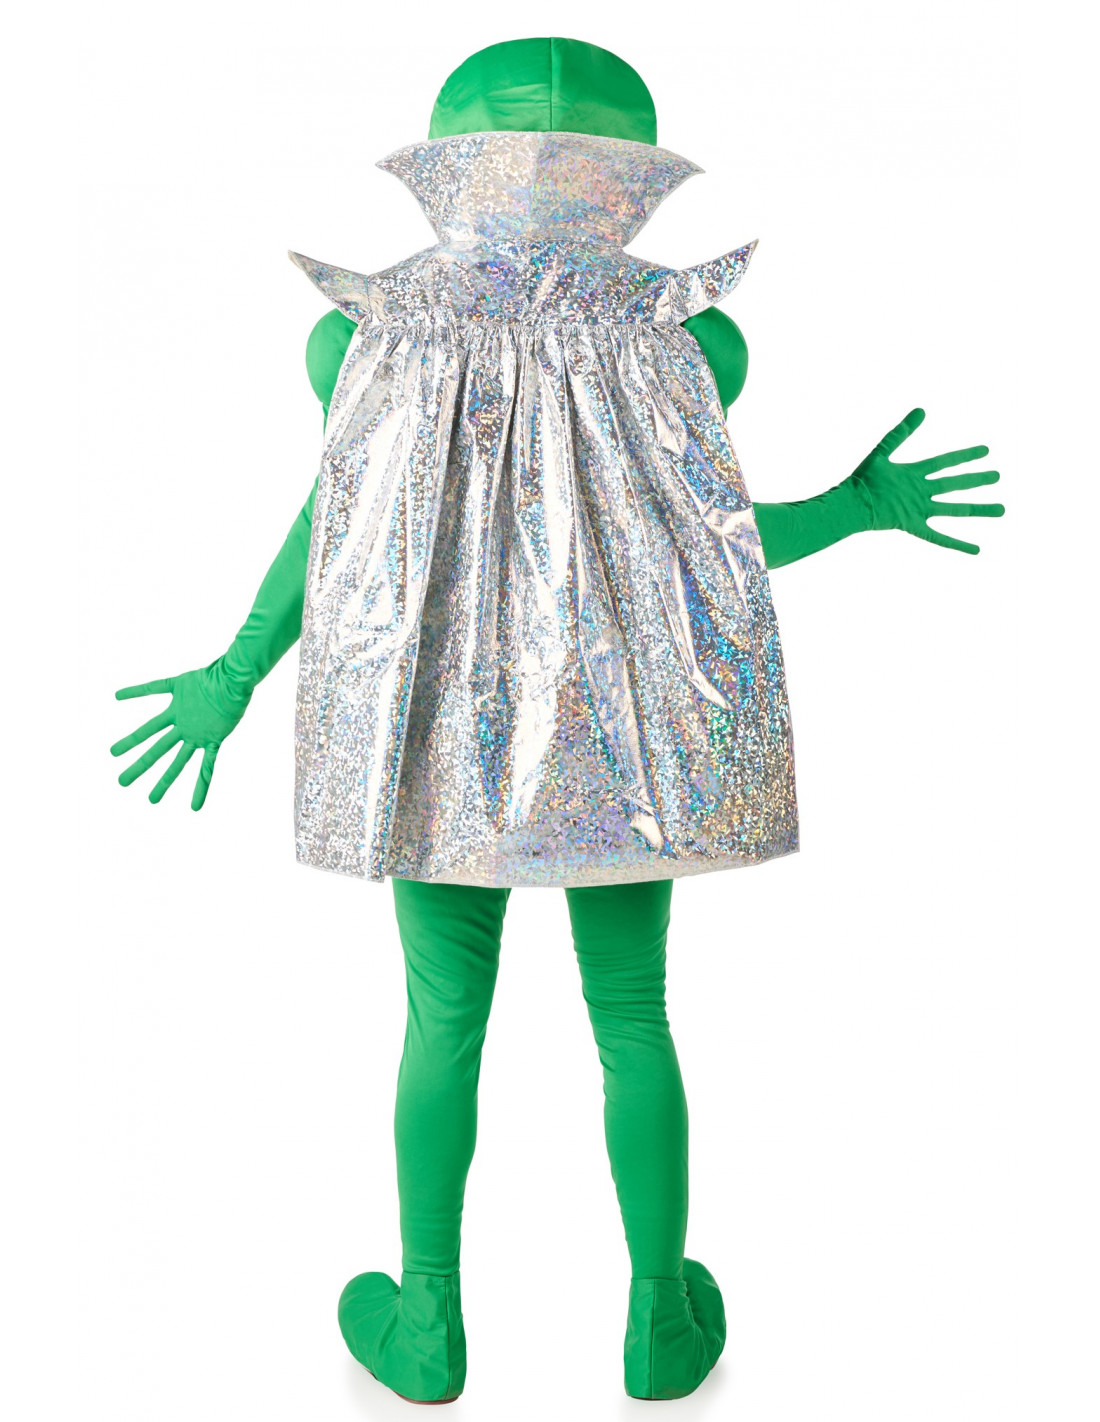 Comprar Disfraz de Alien Verde Tunica - Disfraces Halloween